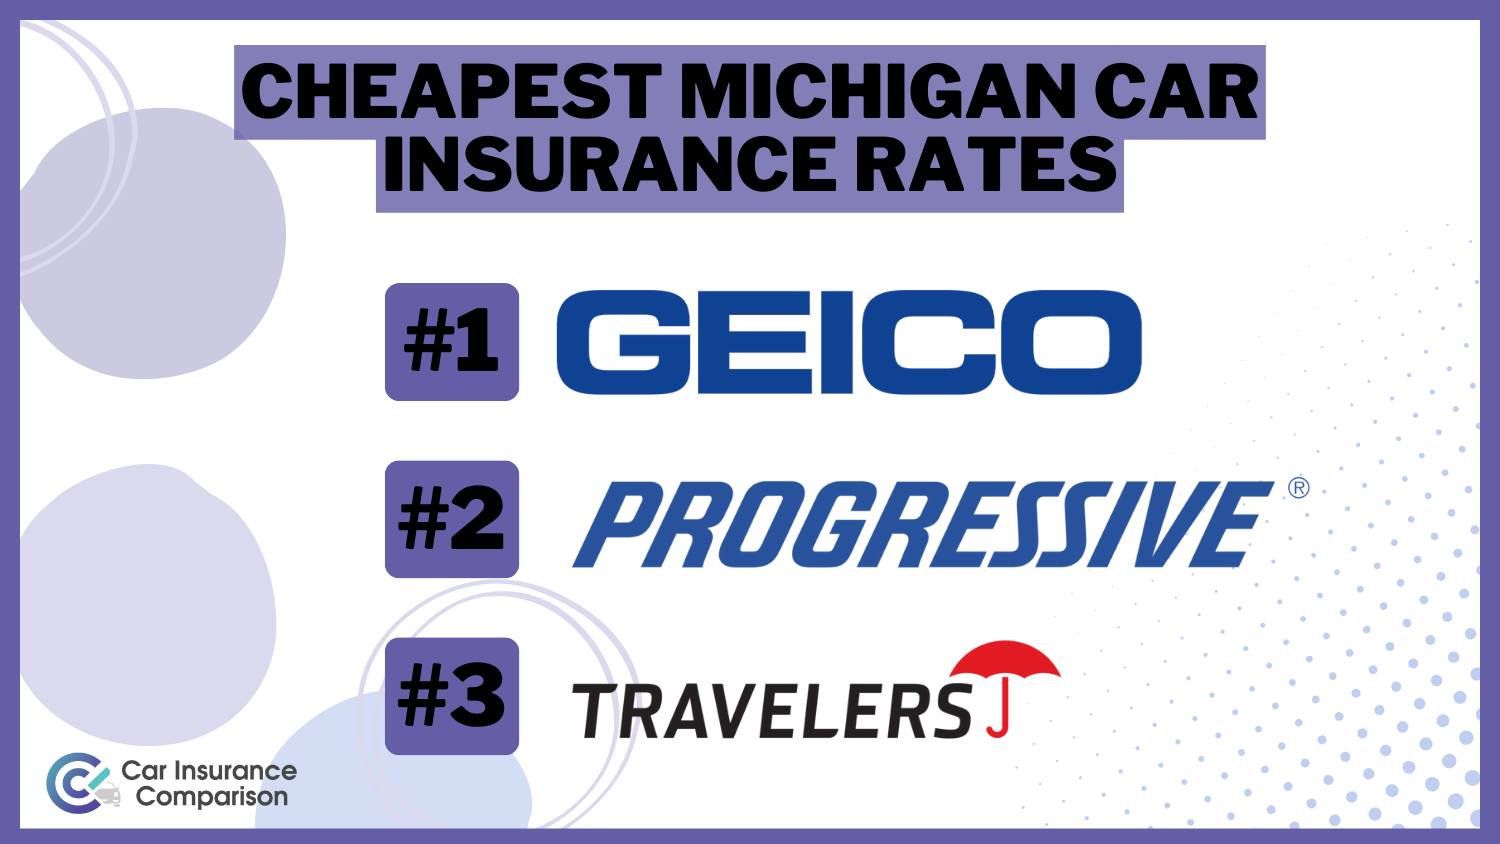 Cheapest Michigan Car Insurance Rates: Geico, Progressive, Travelers